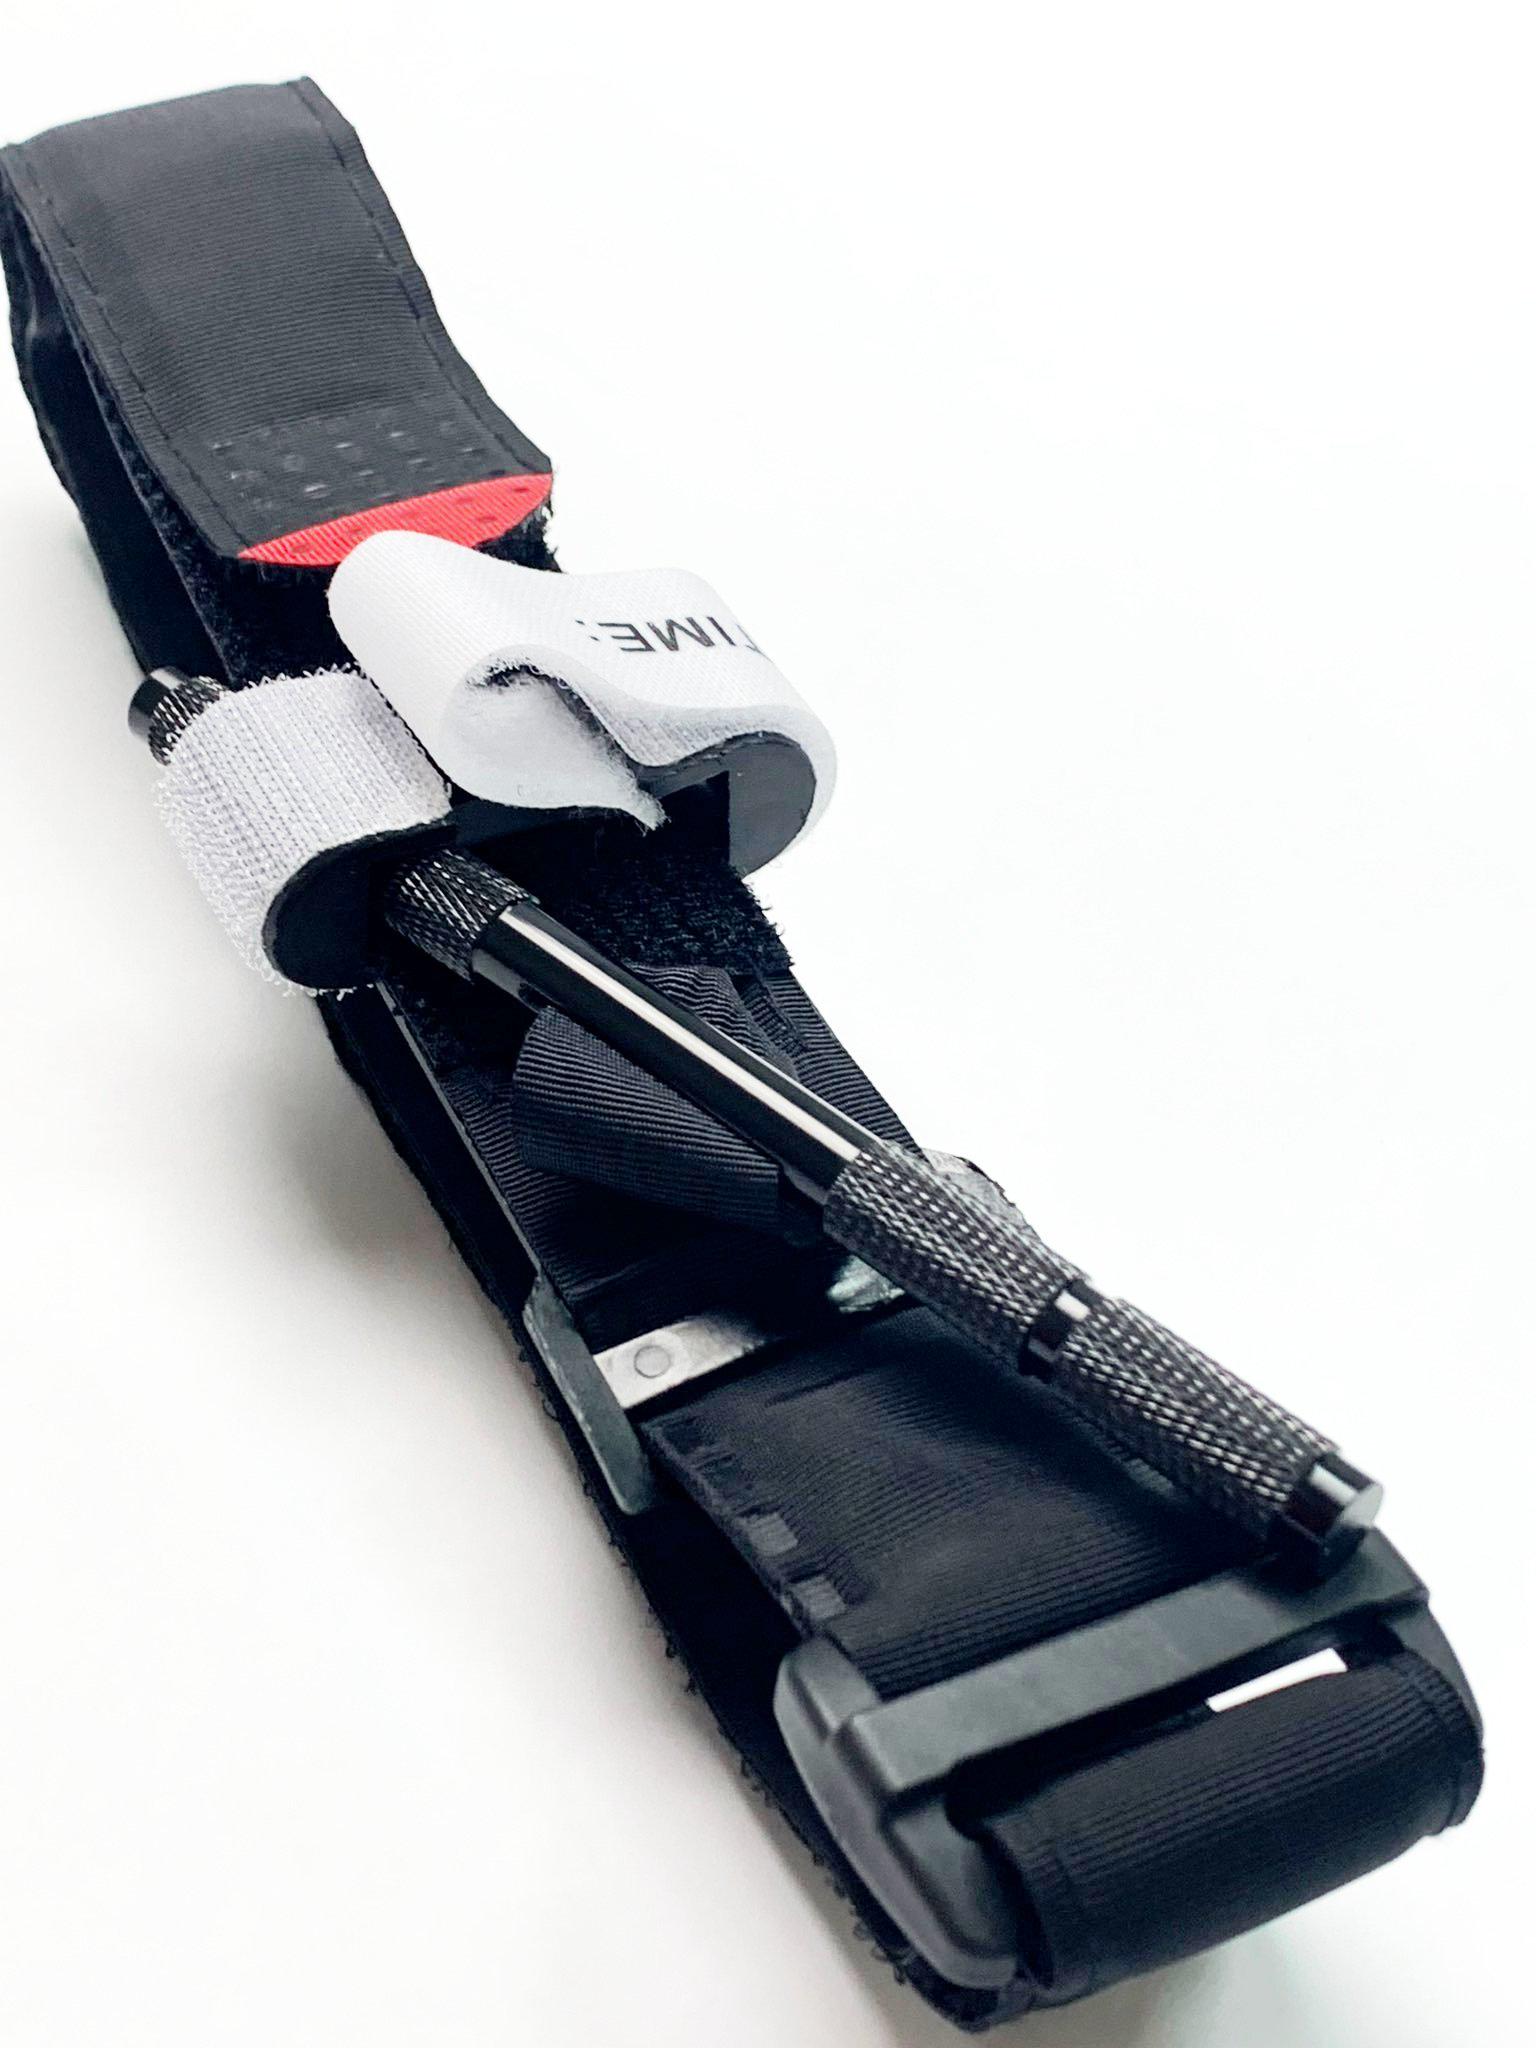 Джгут-турнікет кровоспинний Shenzhen TMI Medical з металевим воротком 3,8х95 см 10 шт. Чорний (00006)